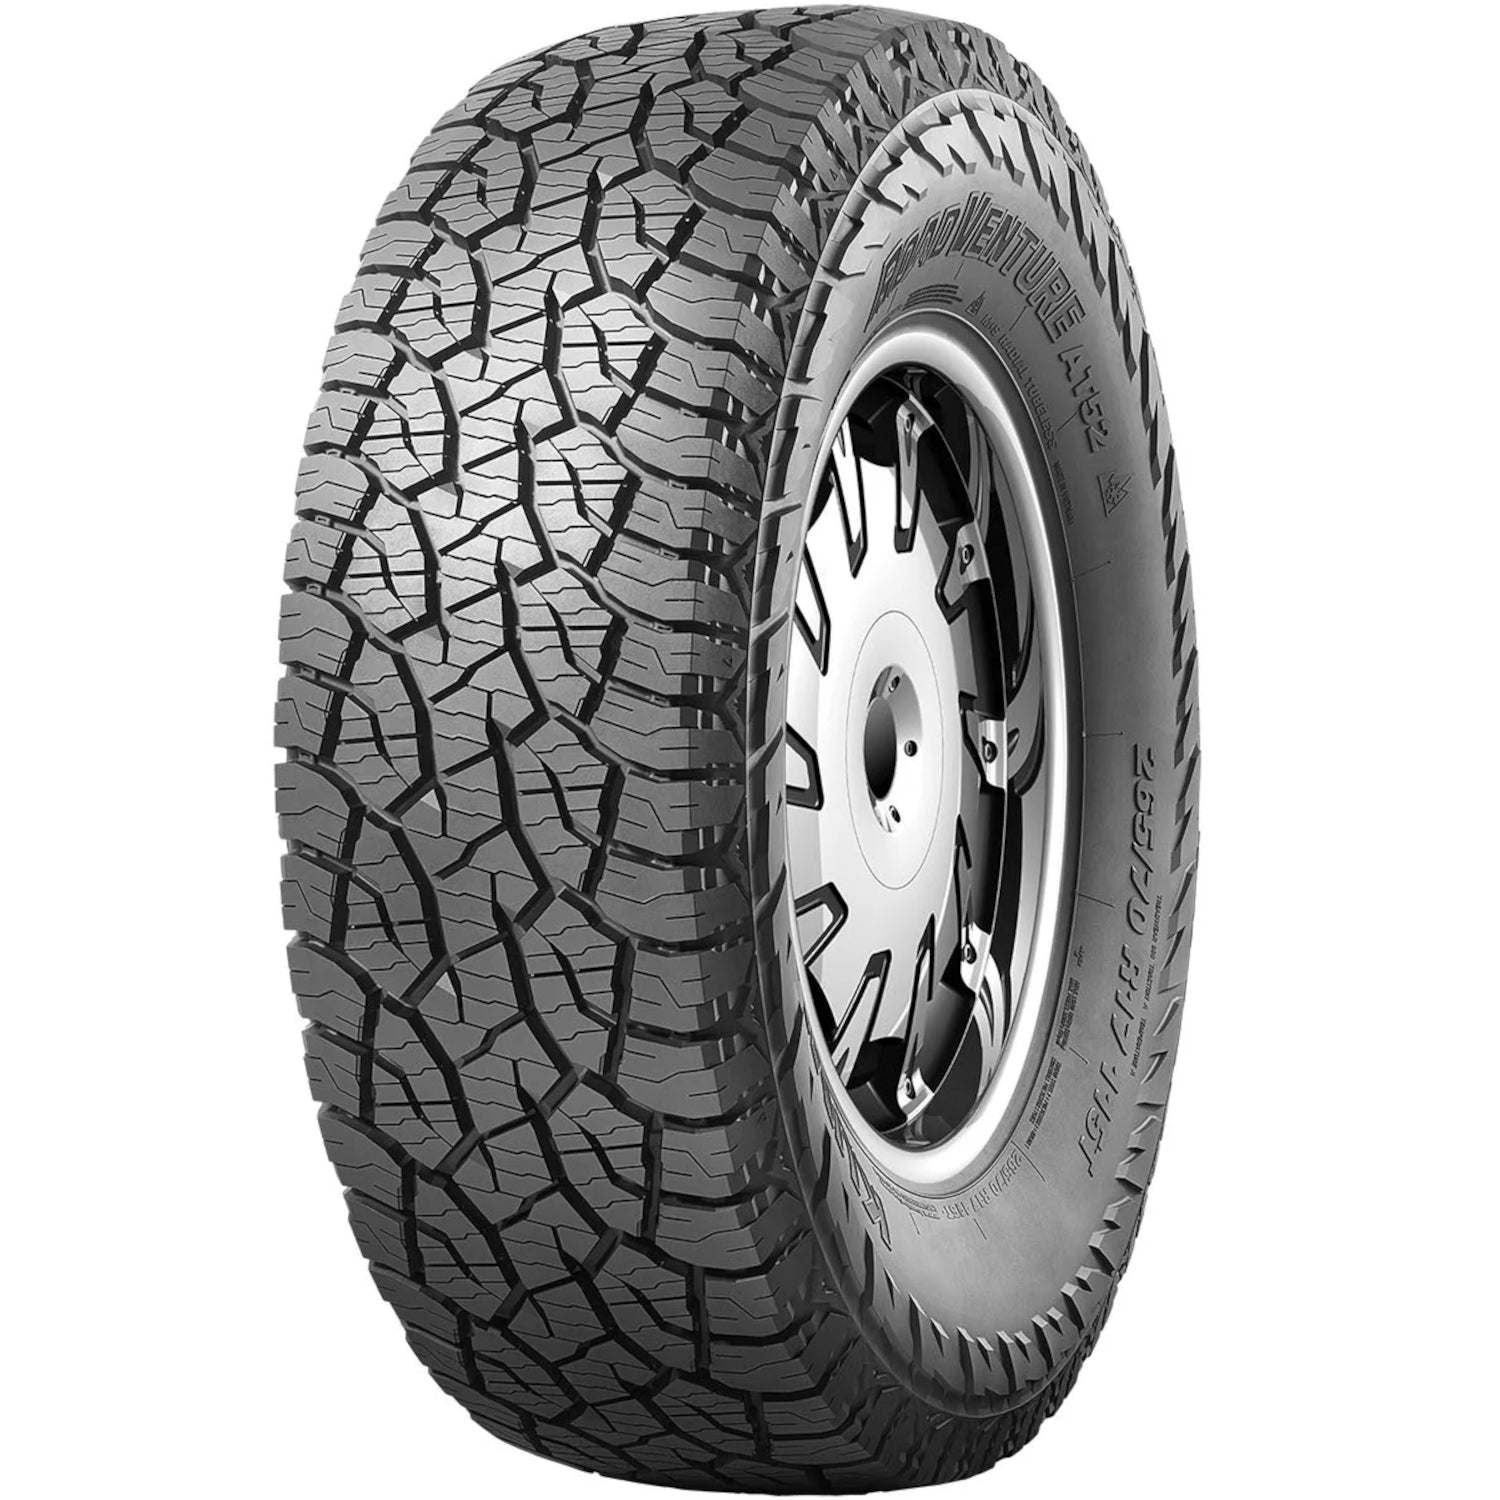 KUMHO ROAD VENTURE AT52 LT255/75R17 (32X10R 17) Tires